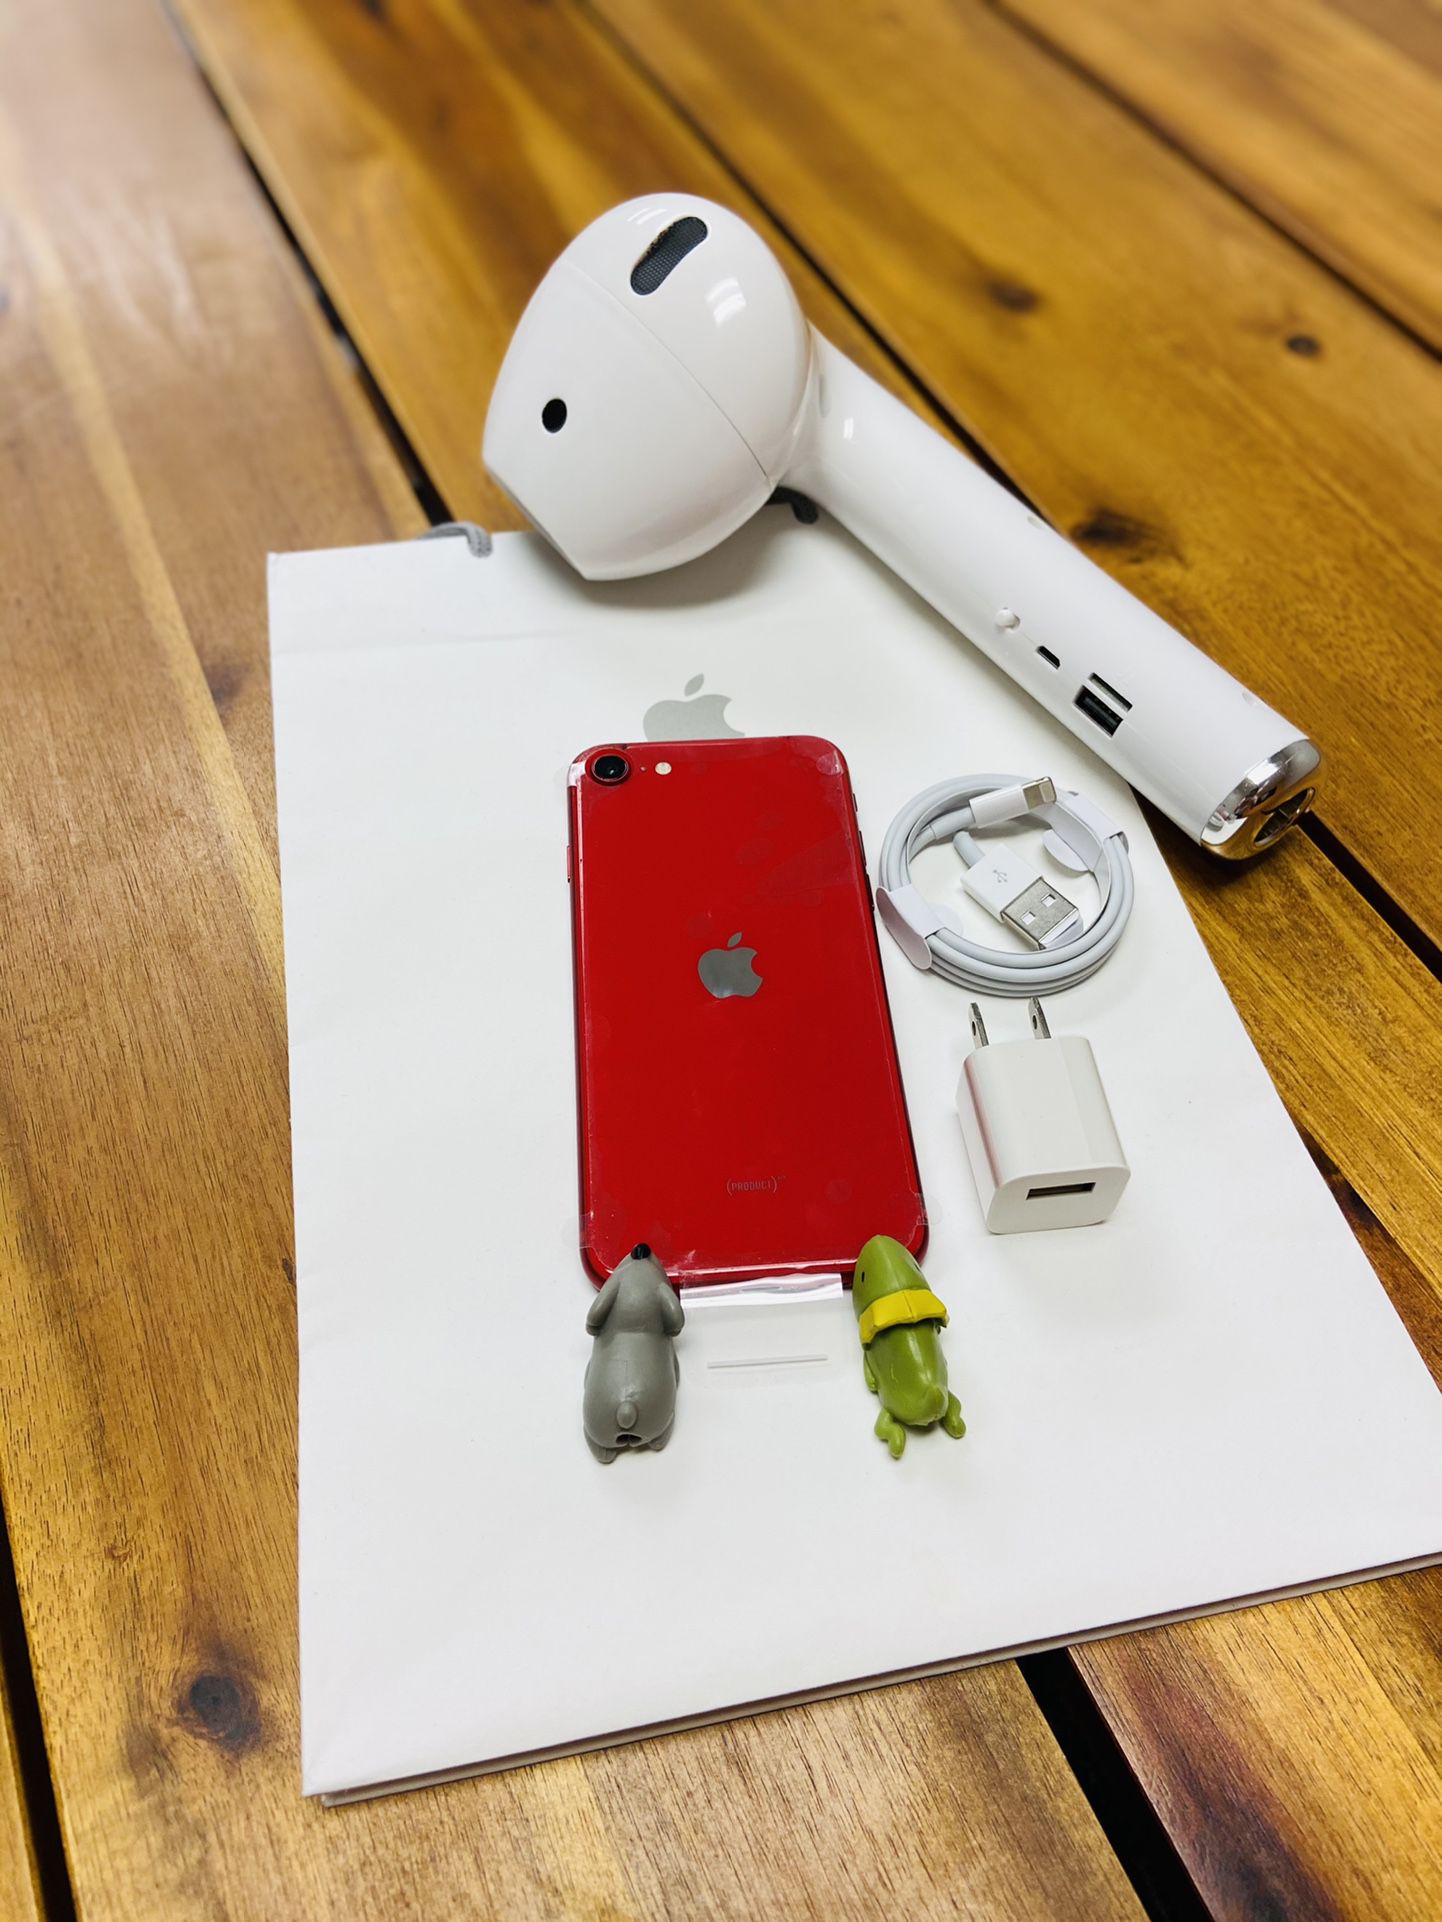 iPhone SE 128GB Red (2020) Factory Unlocked + Warranty